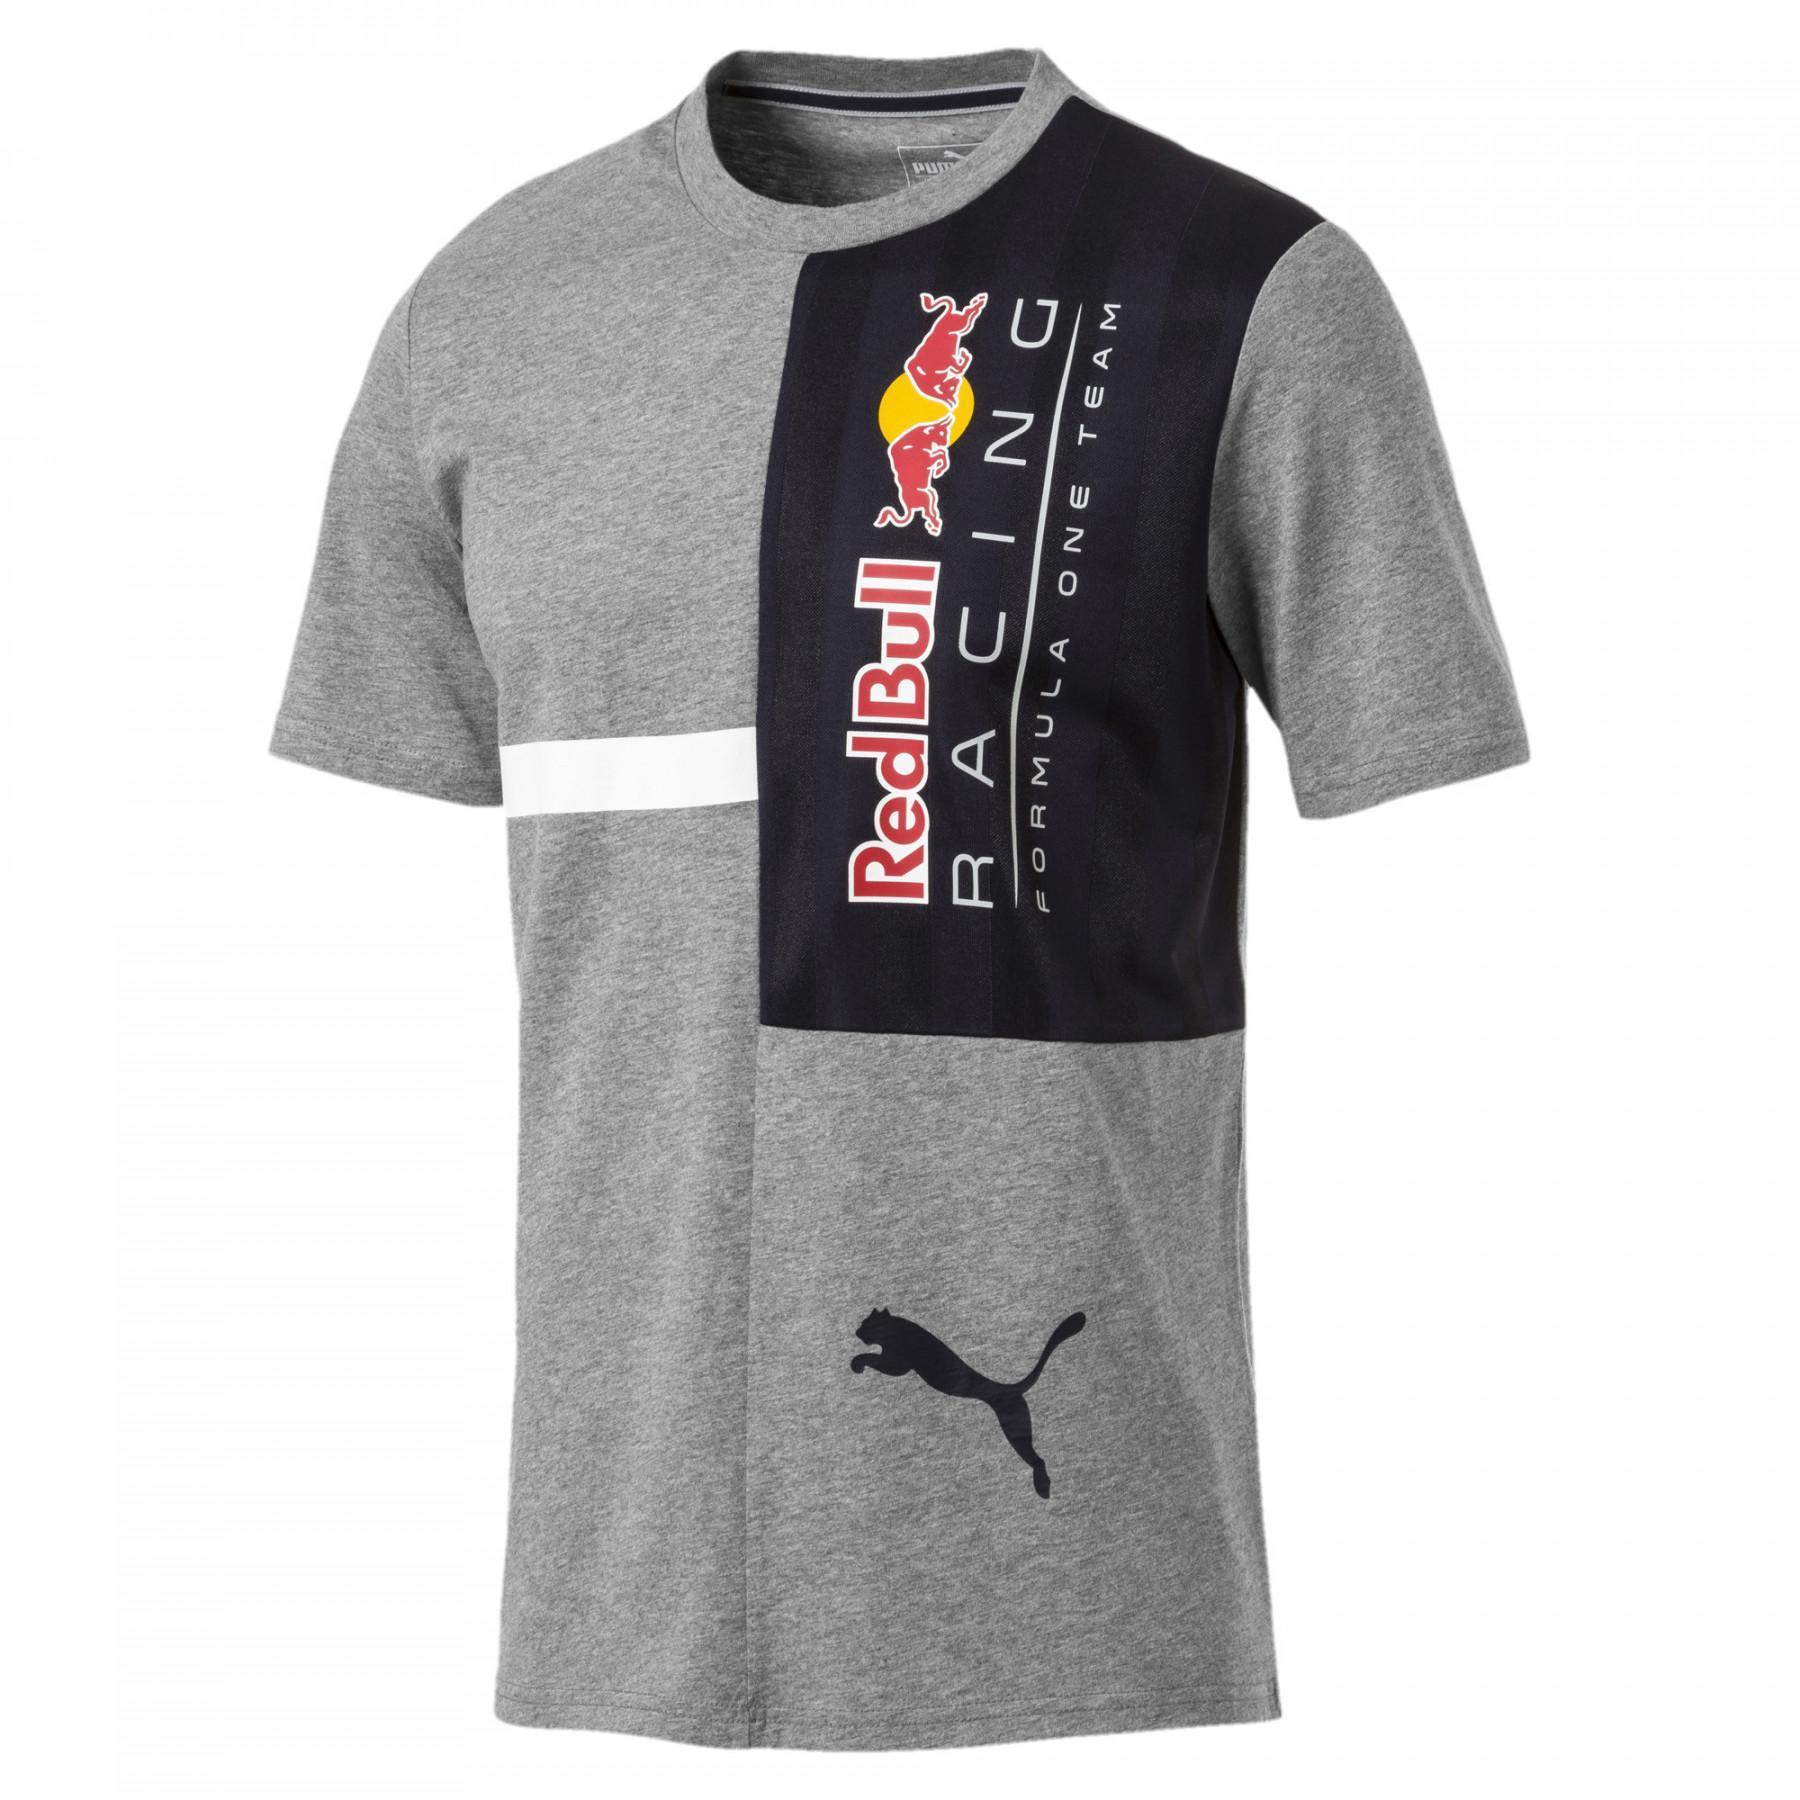  PumaT - s h i r t   Red Bull Racing